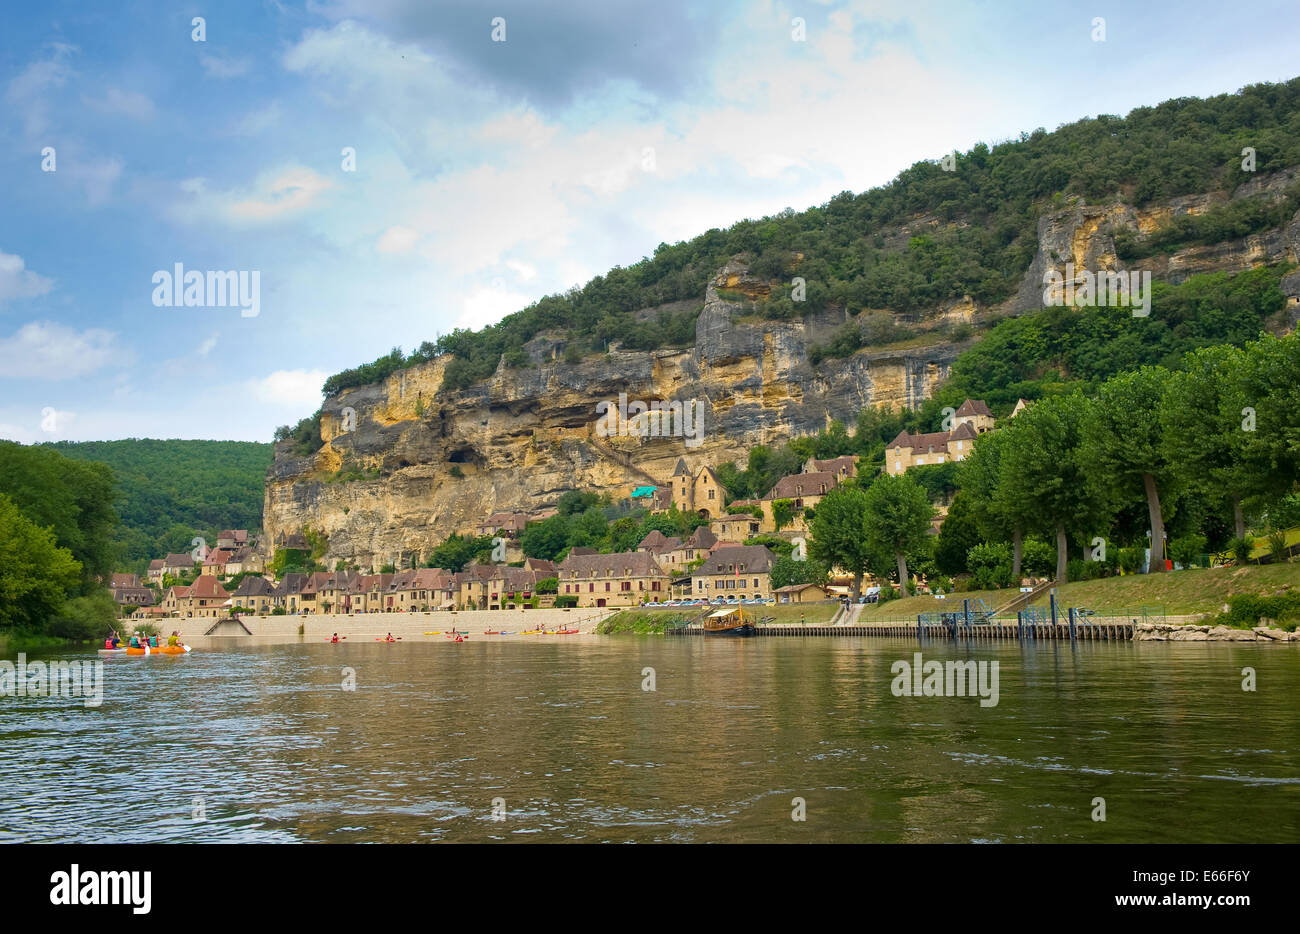 Das Dorf La Roque Gageac am Ufer des Flusses Dordogne in Frankreich Stockfoto